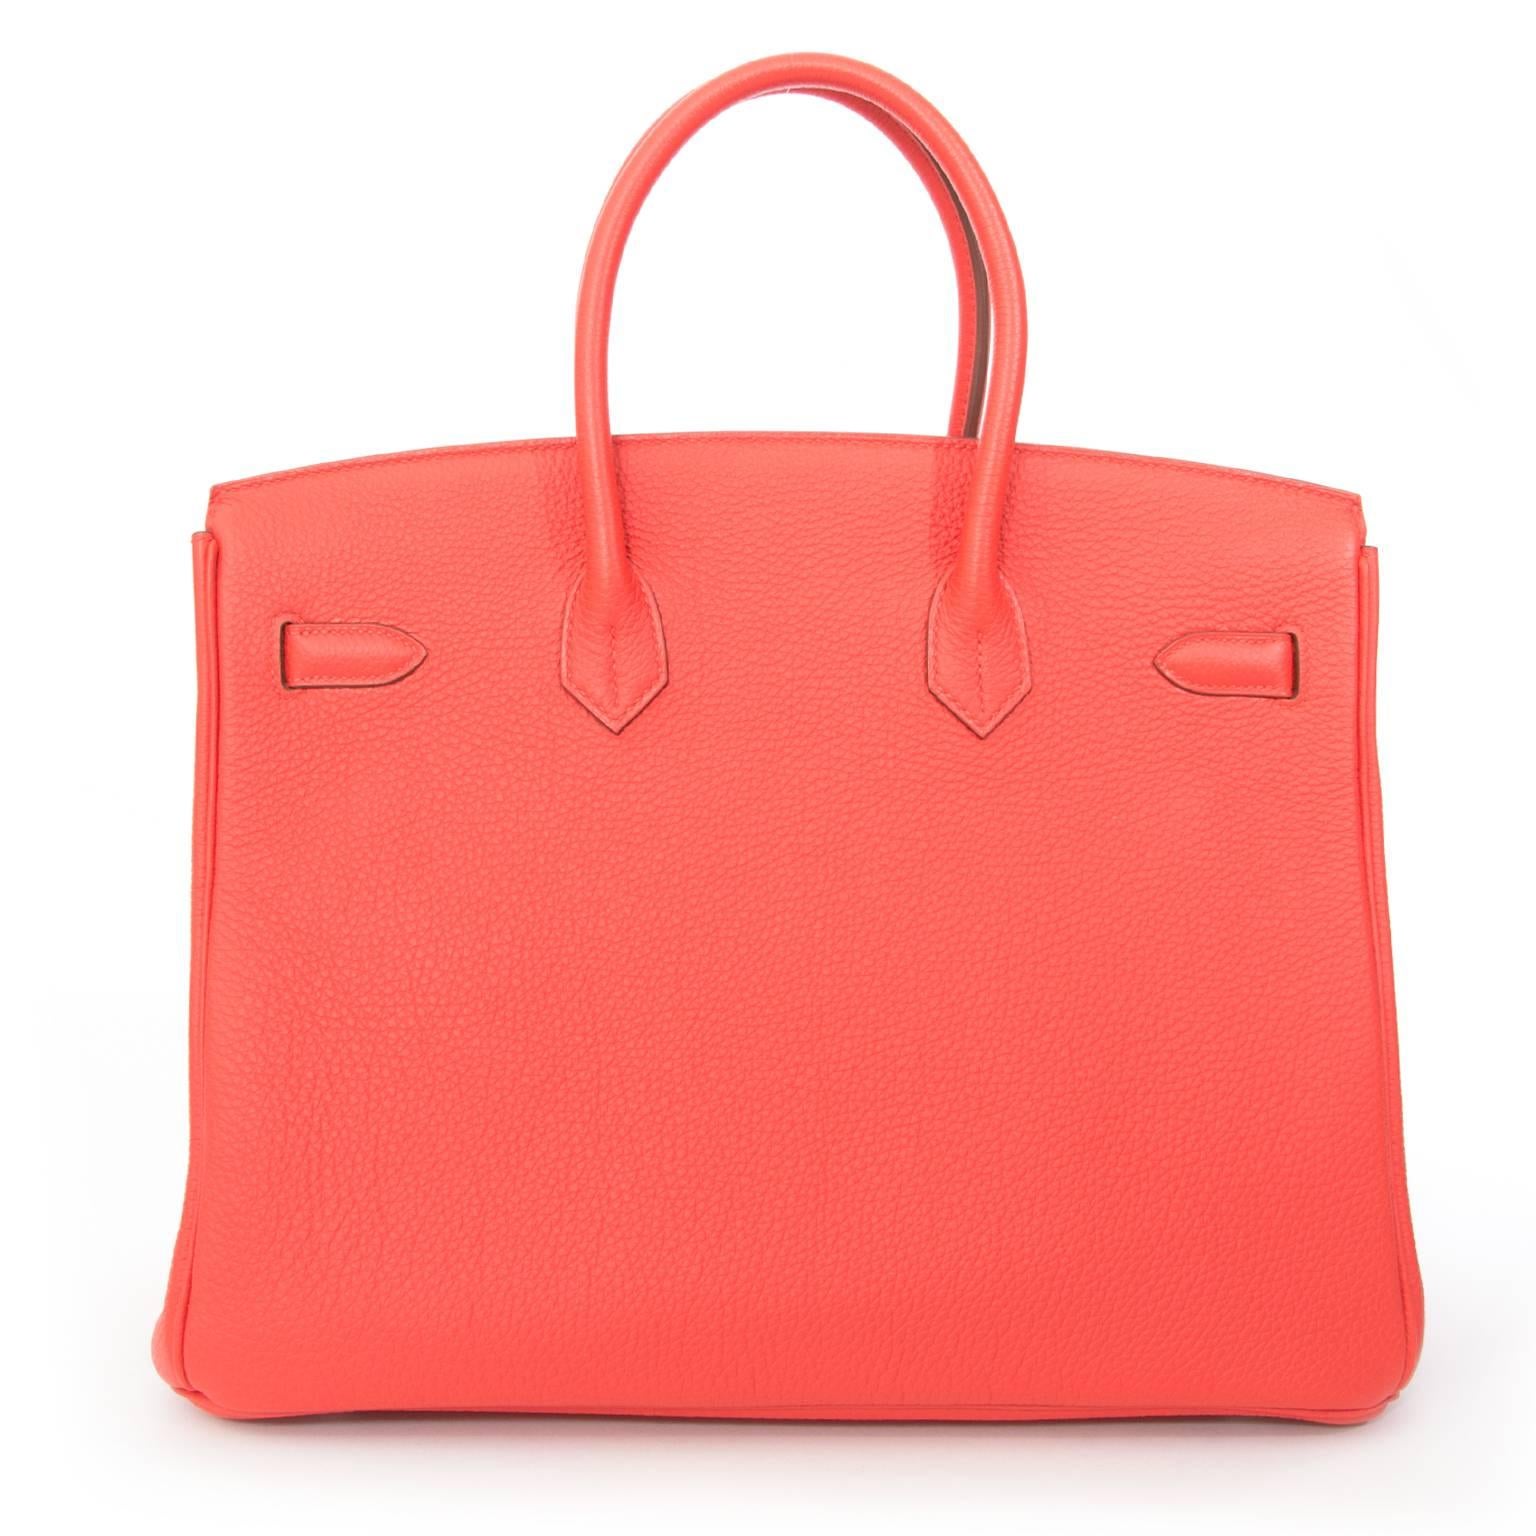 BRAND NEW Hermès Birkin Bag Togo Capucine PHW 35cm  1